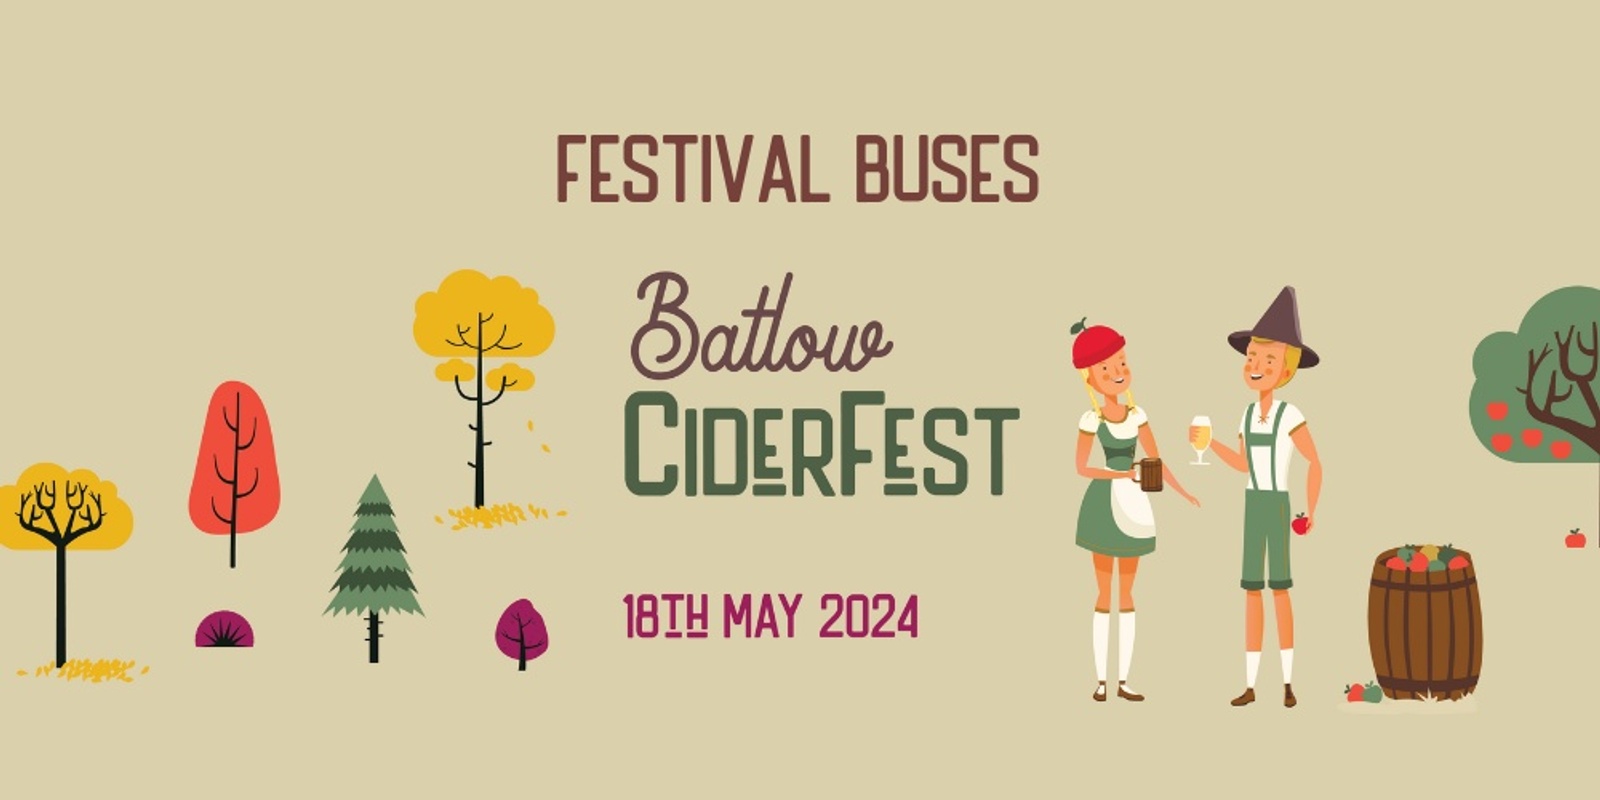 Banner image for Batlow CiderFest 2024 | Festival Busses